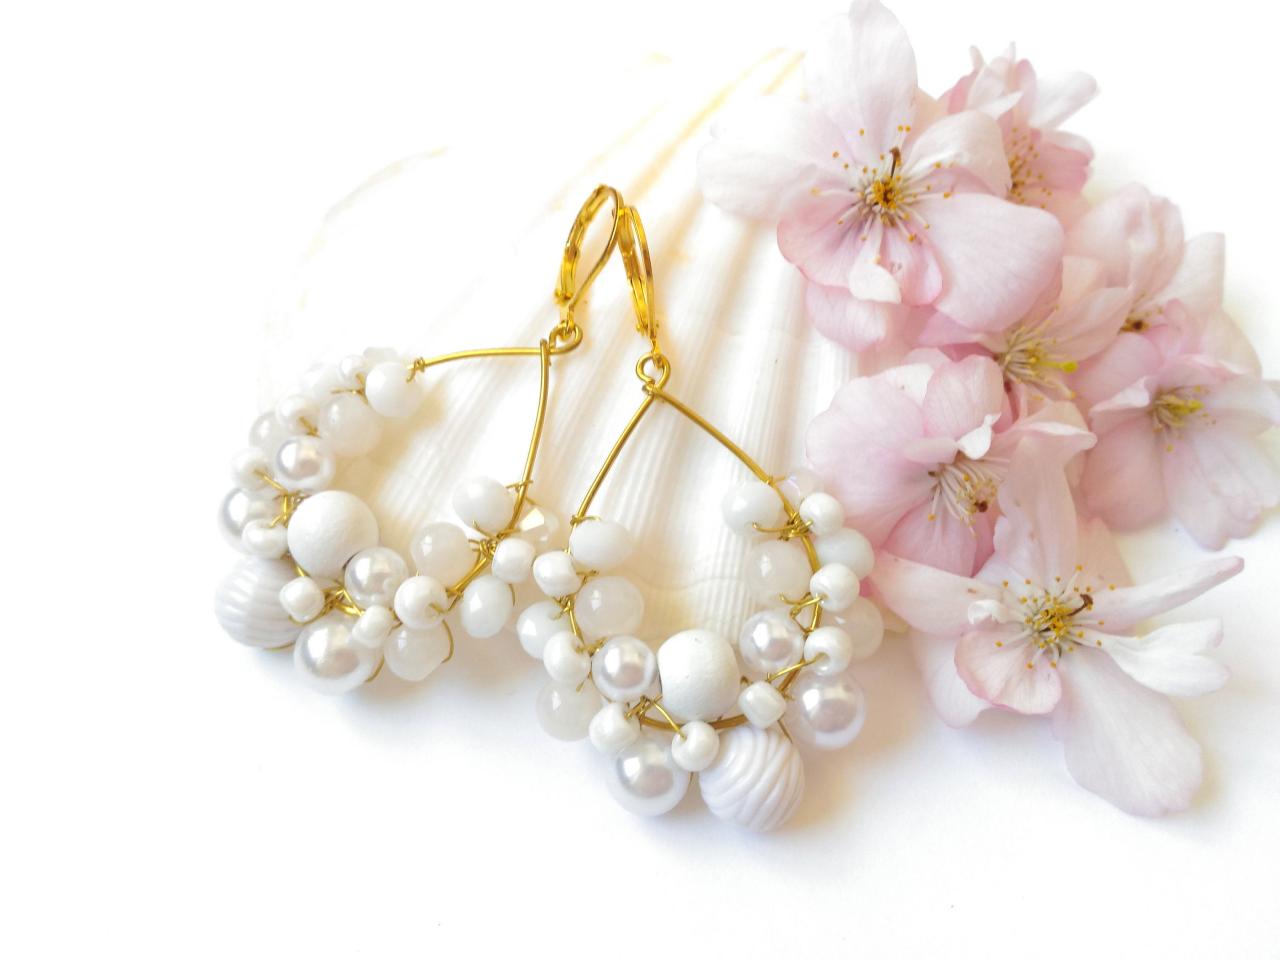 White Wedding Earrings, White And Gold Pearl Earrings For Bride, Bridal Earrings, Boho Bride, Boho Wedding, White Beaded Vintage Earrings